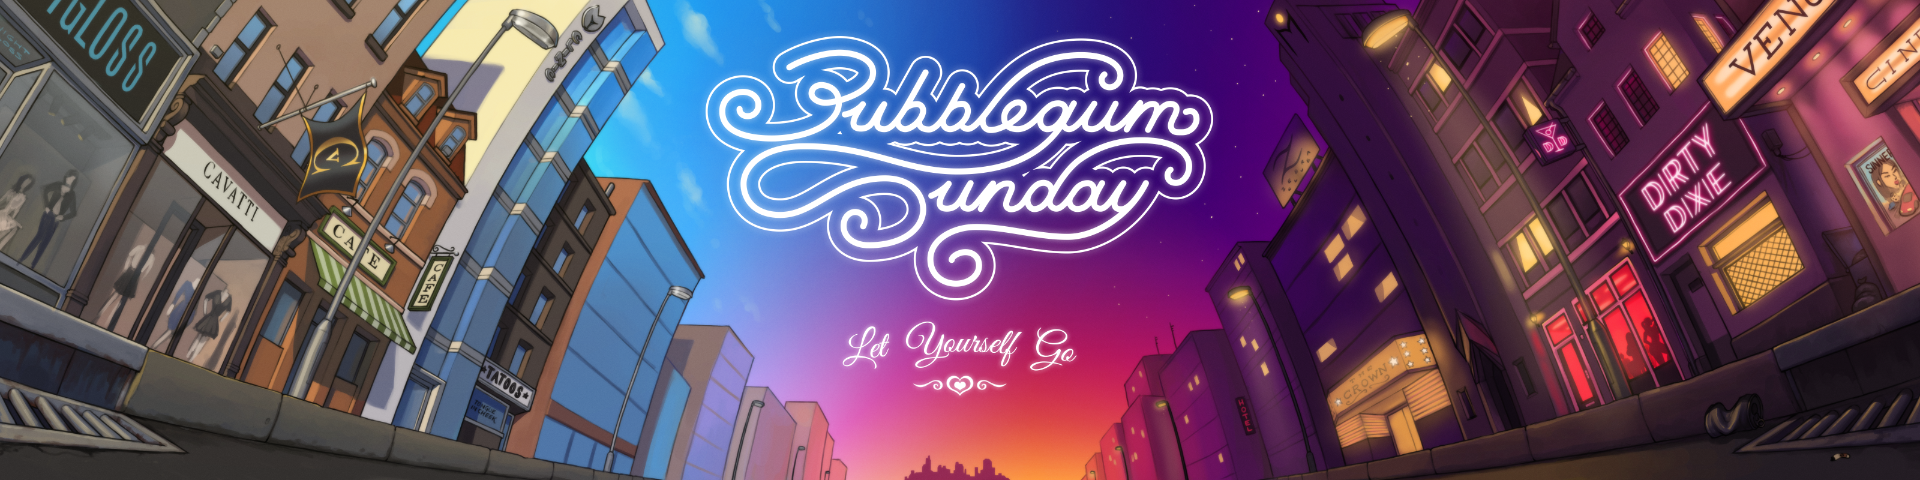 Bubblegum Sunday Alpha 307.